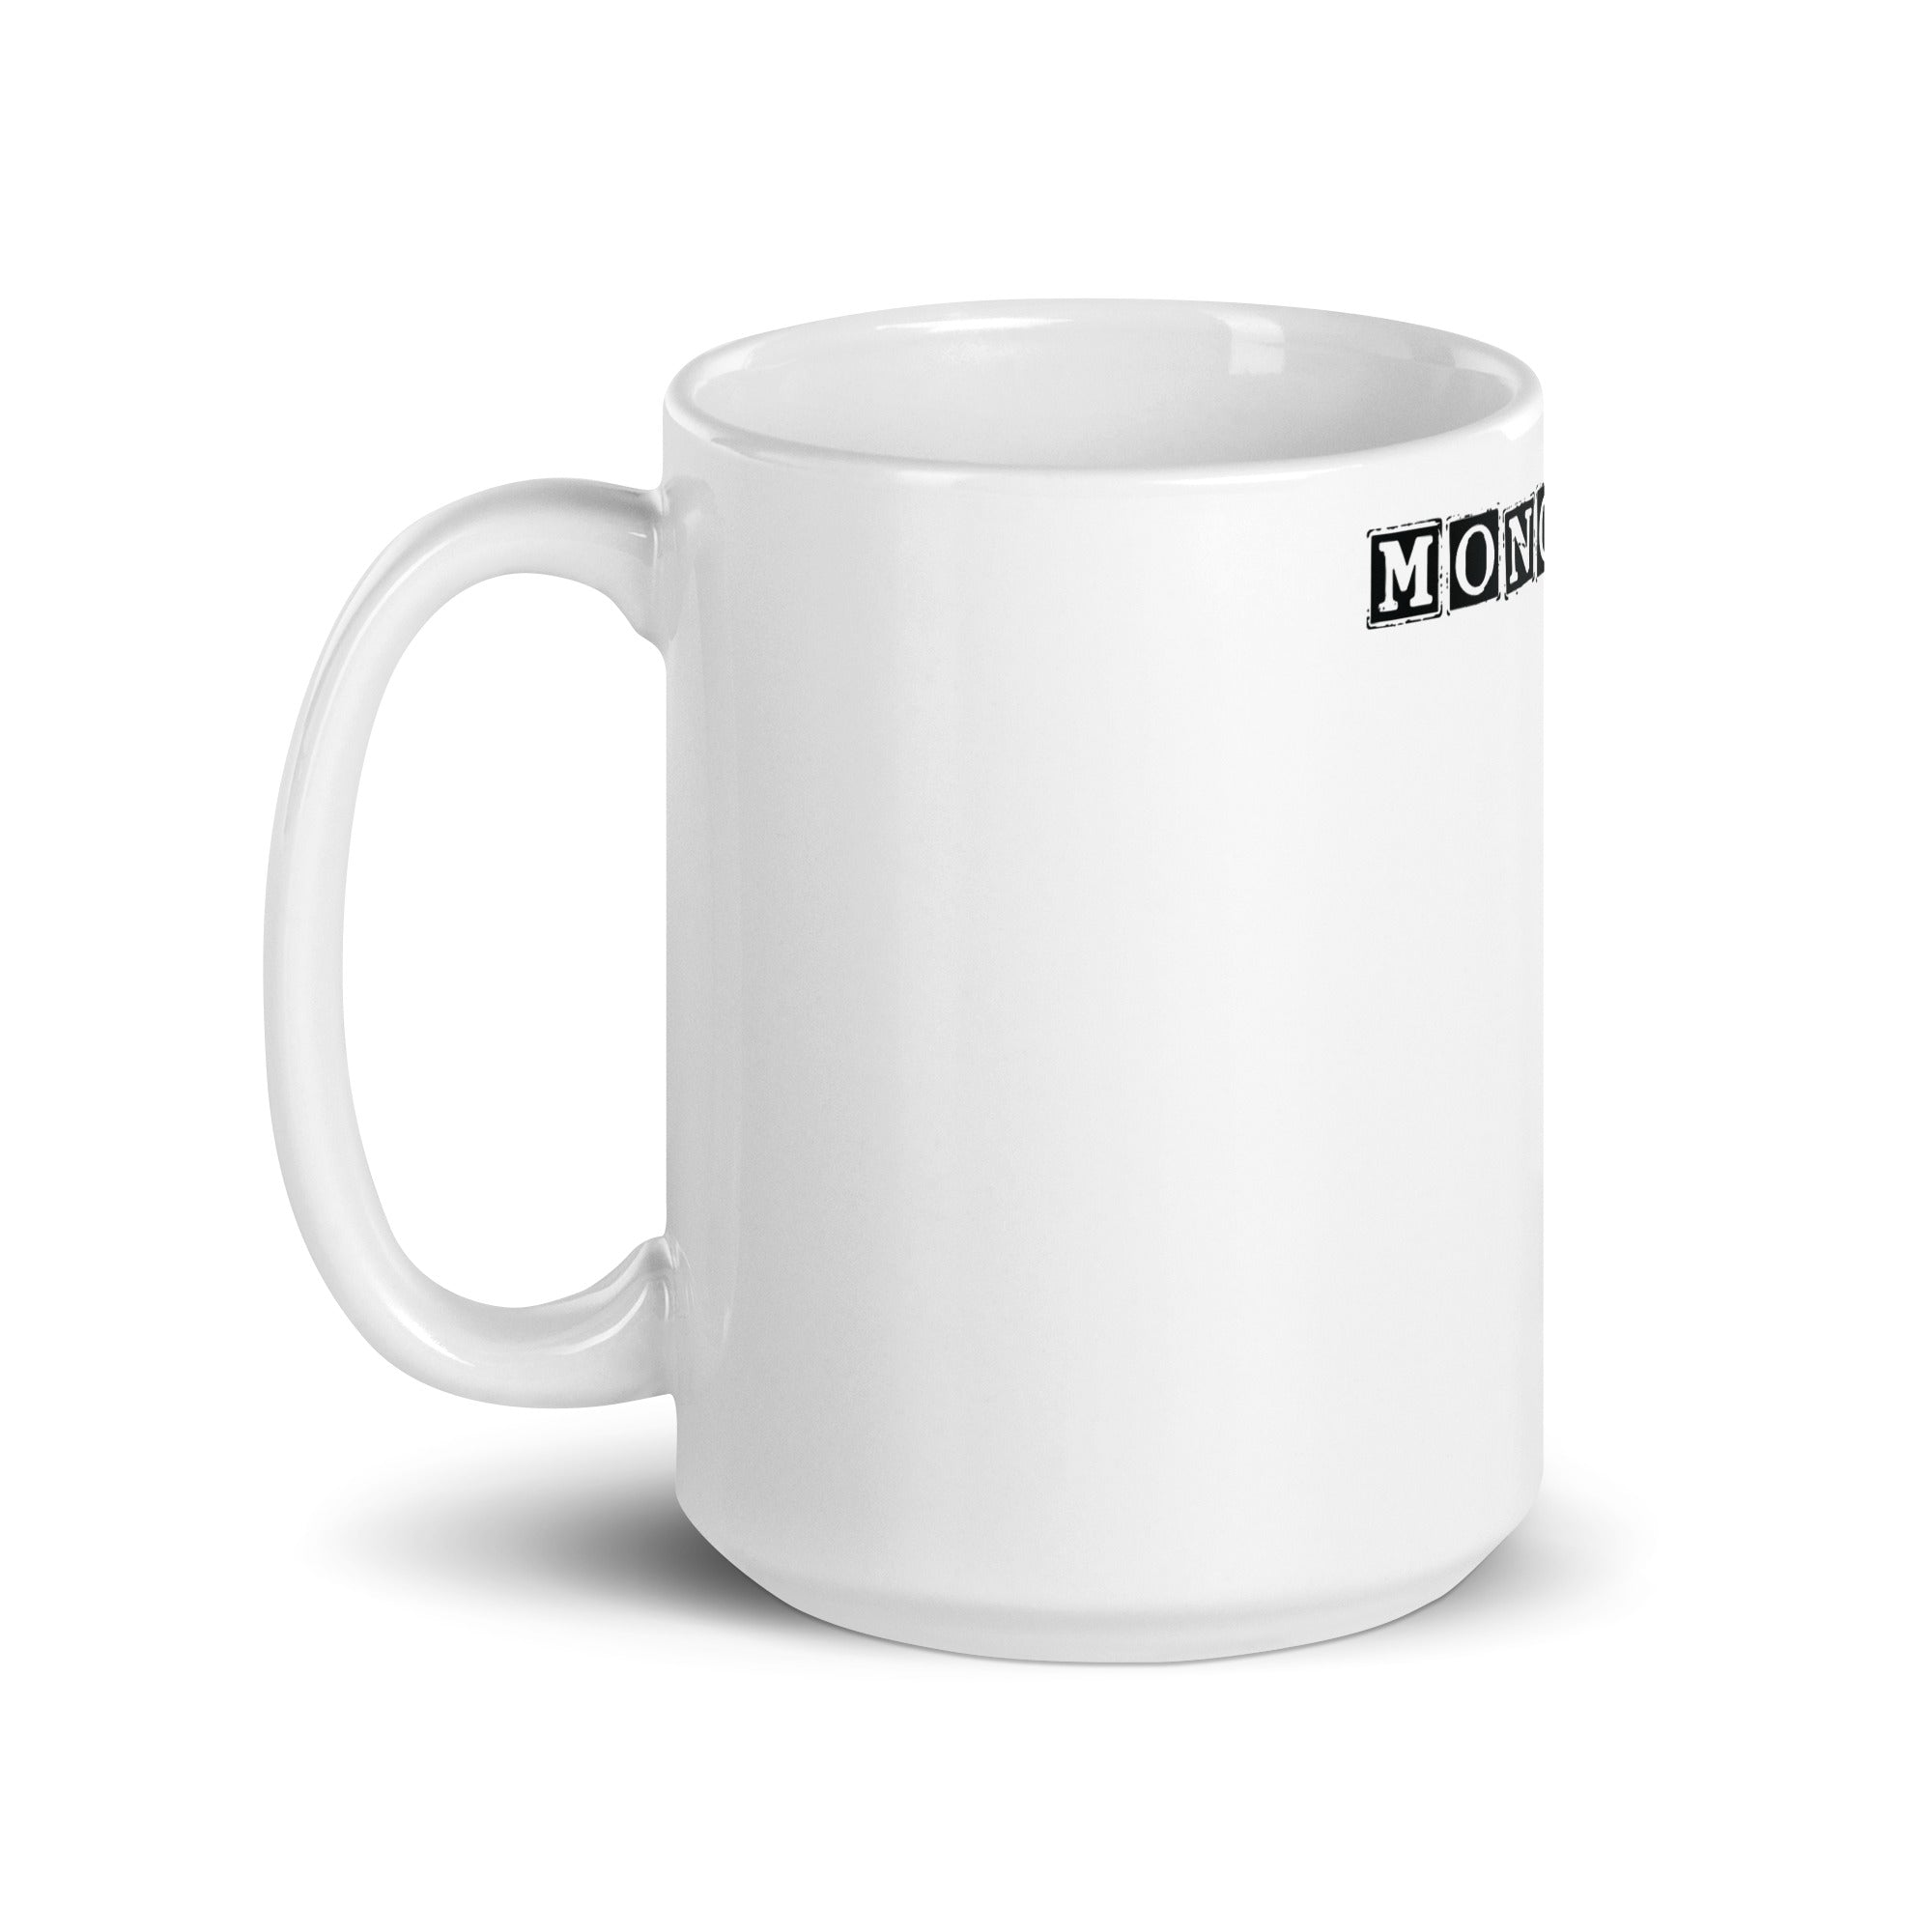 White glossy mug | Monoply